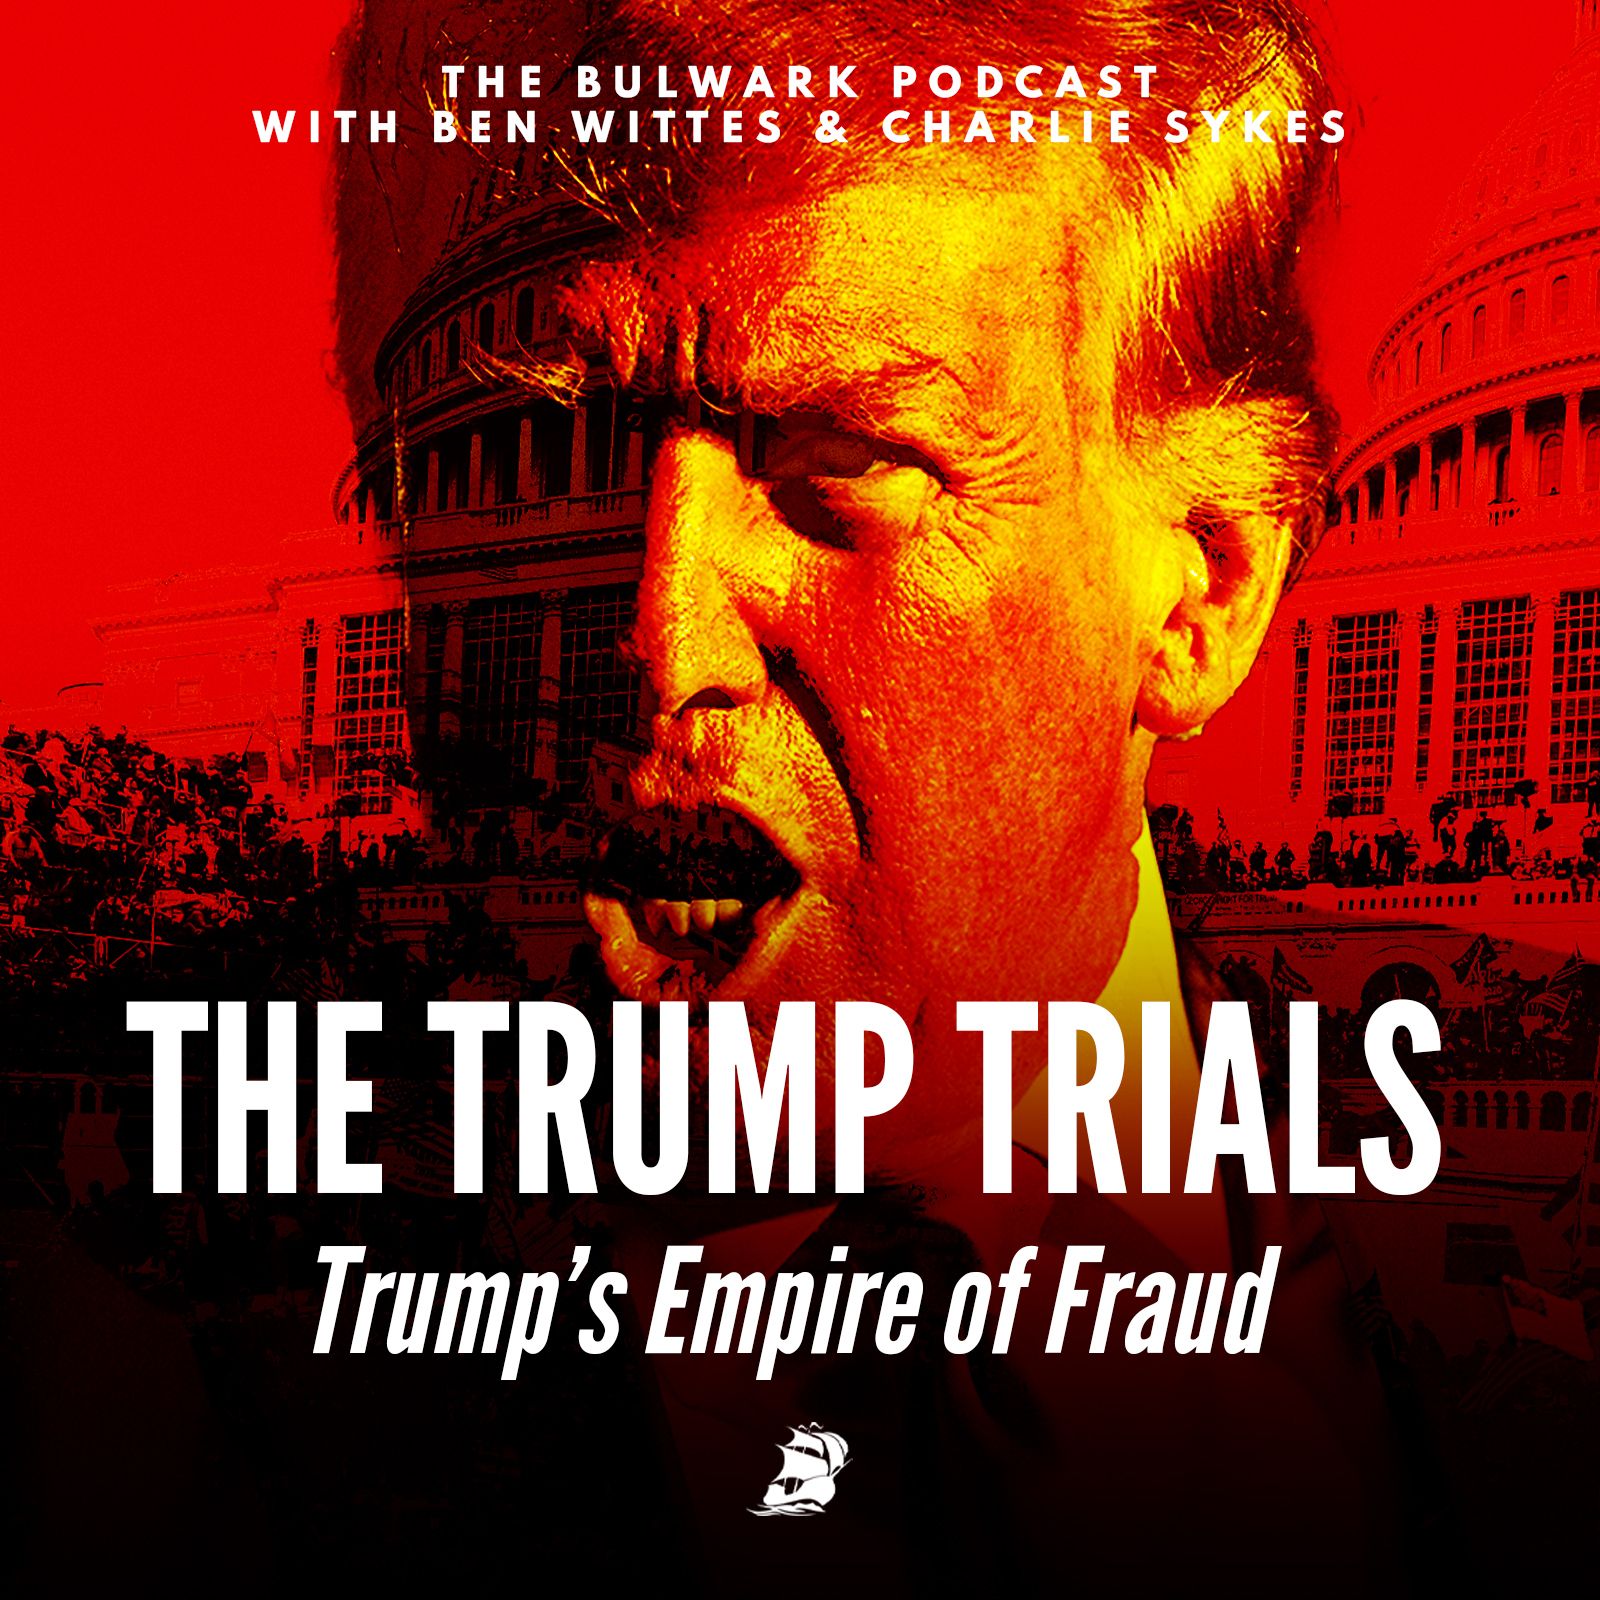 Trump’s Empire of Fraud